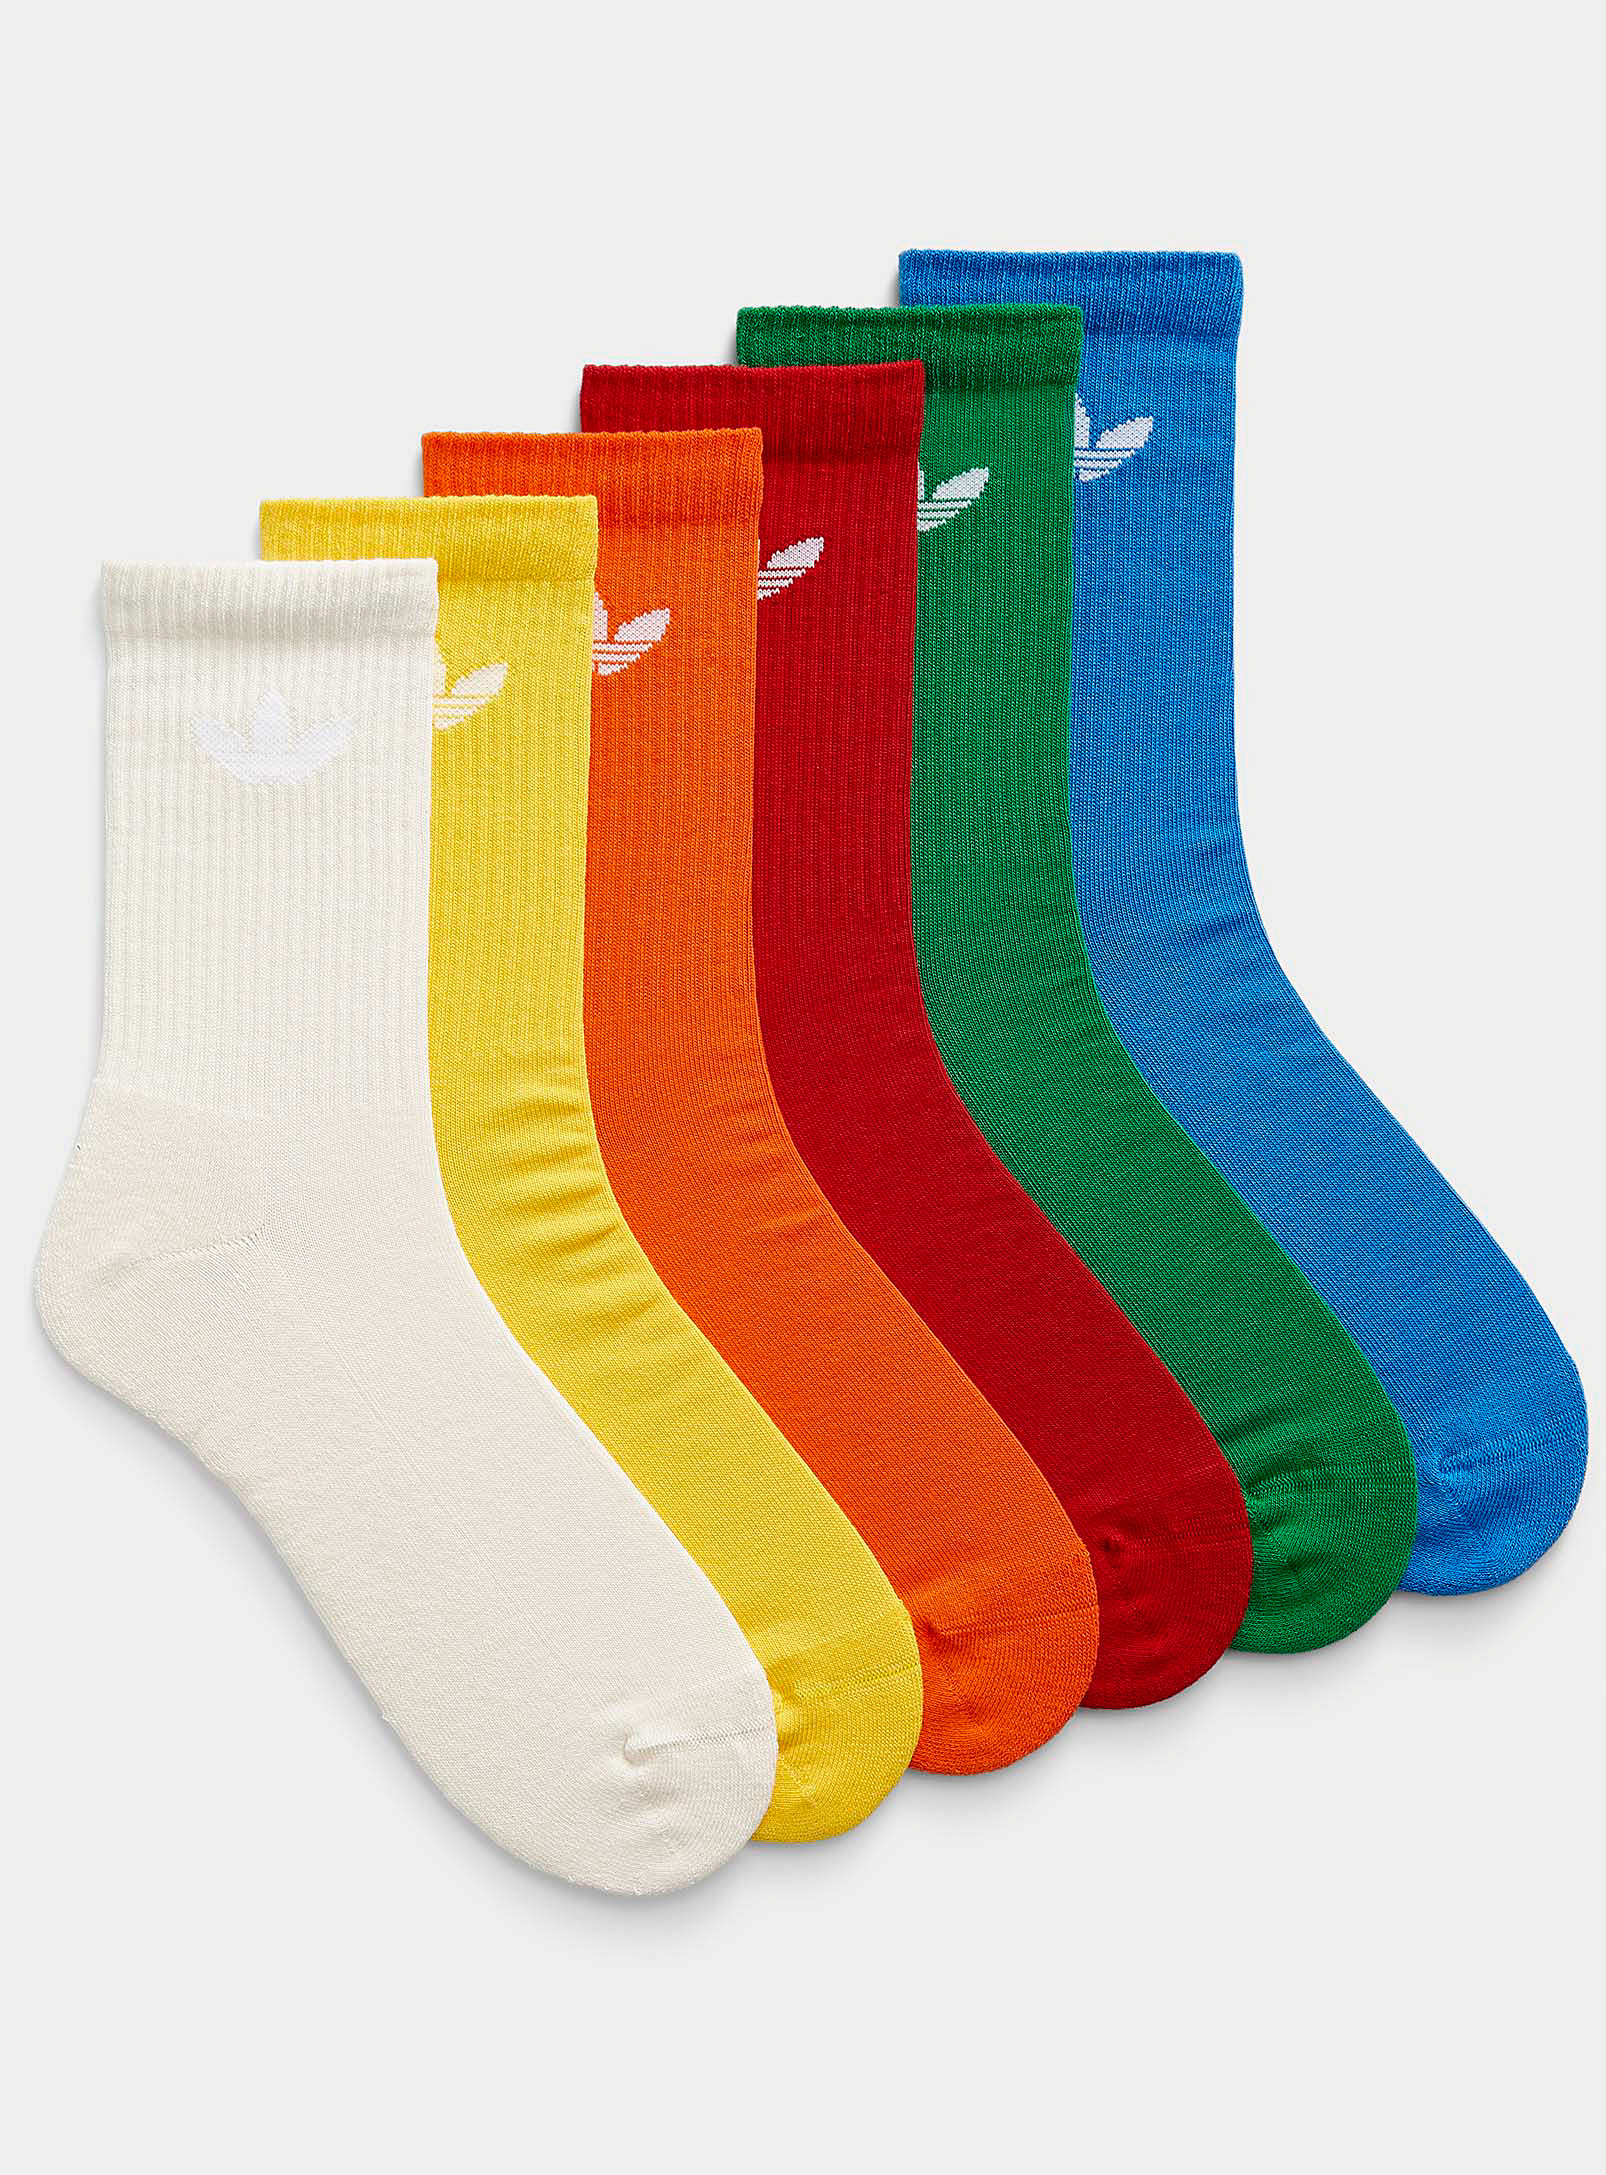 Adidas Originals - Men's Solid athletic socks 6-pack